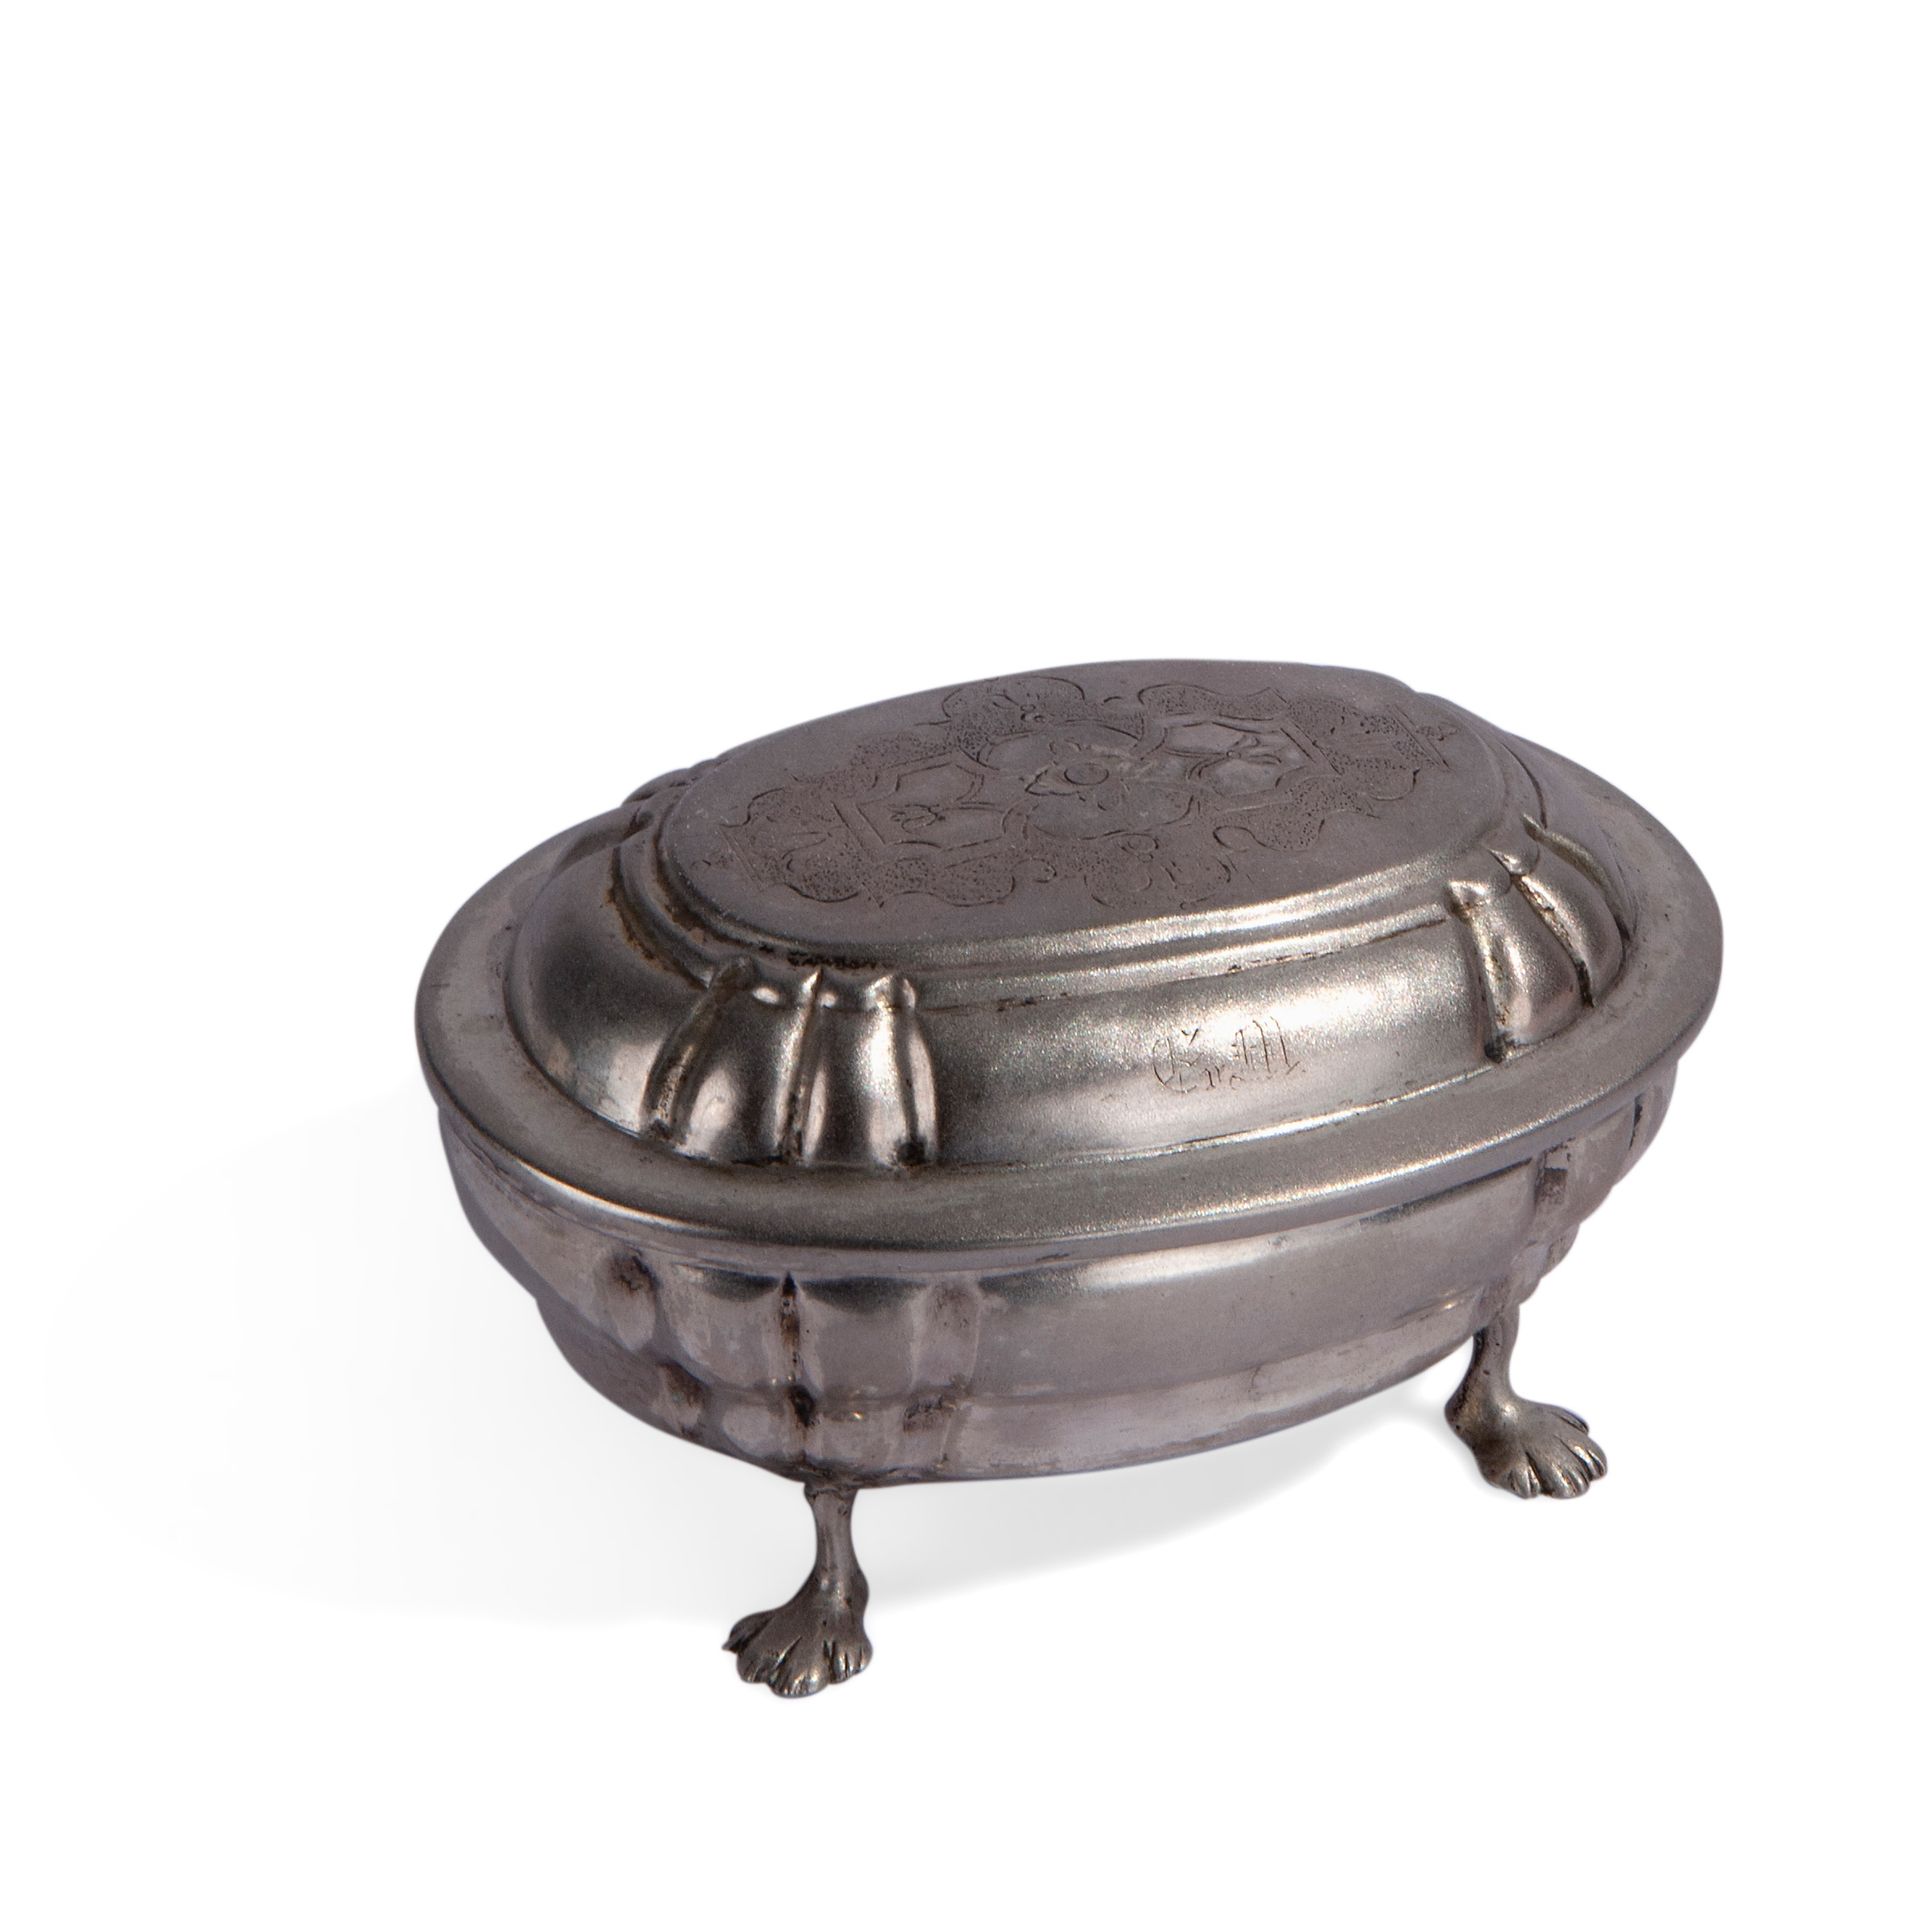 Embossed and engraved silver sugar bowl, Germany 18th century 压印和雕刻的银制糖碗，德国 18世纪&hellip;